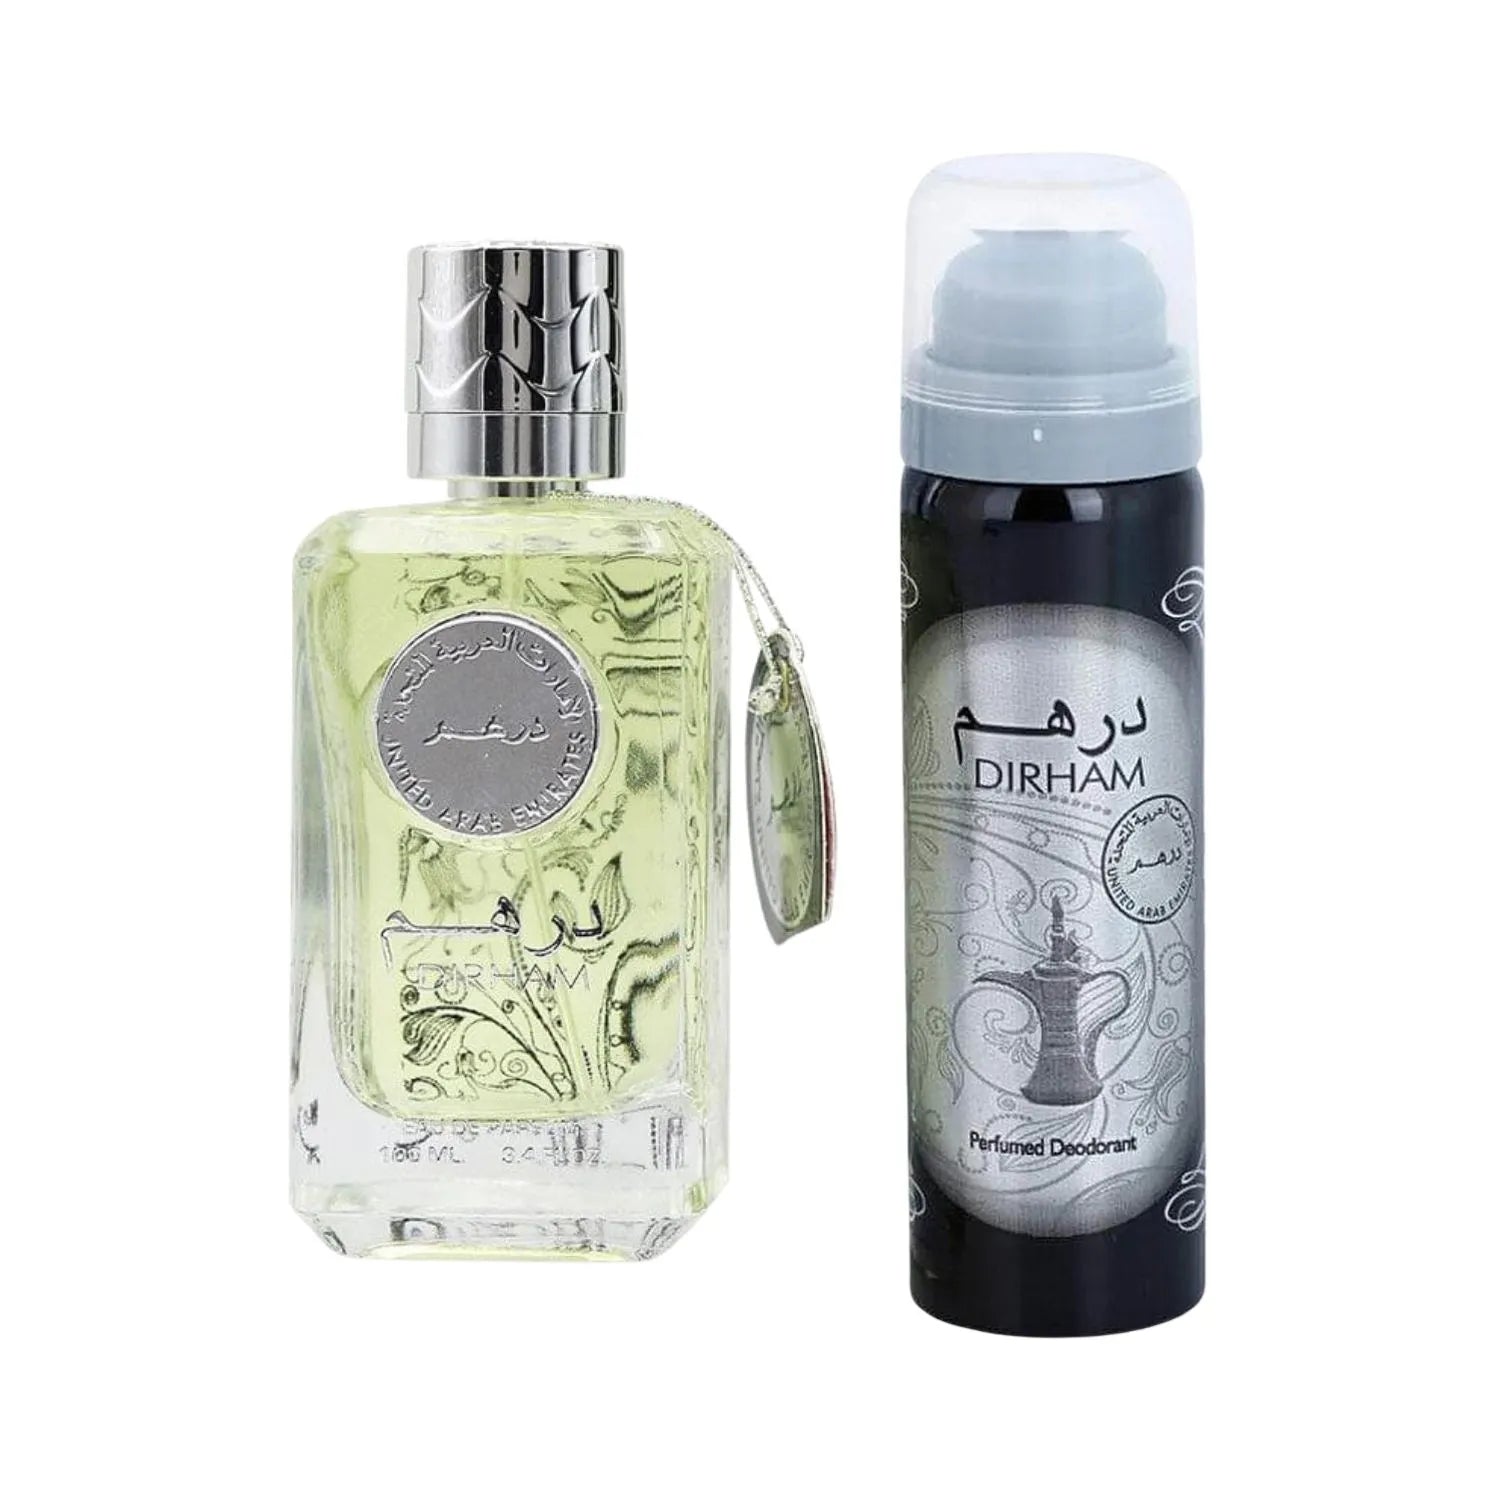 Dirham Silver Perfume Spray 100ml + Deodorant body spray 50ml Combo (U)